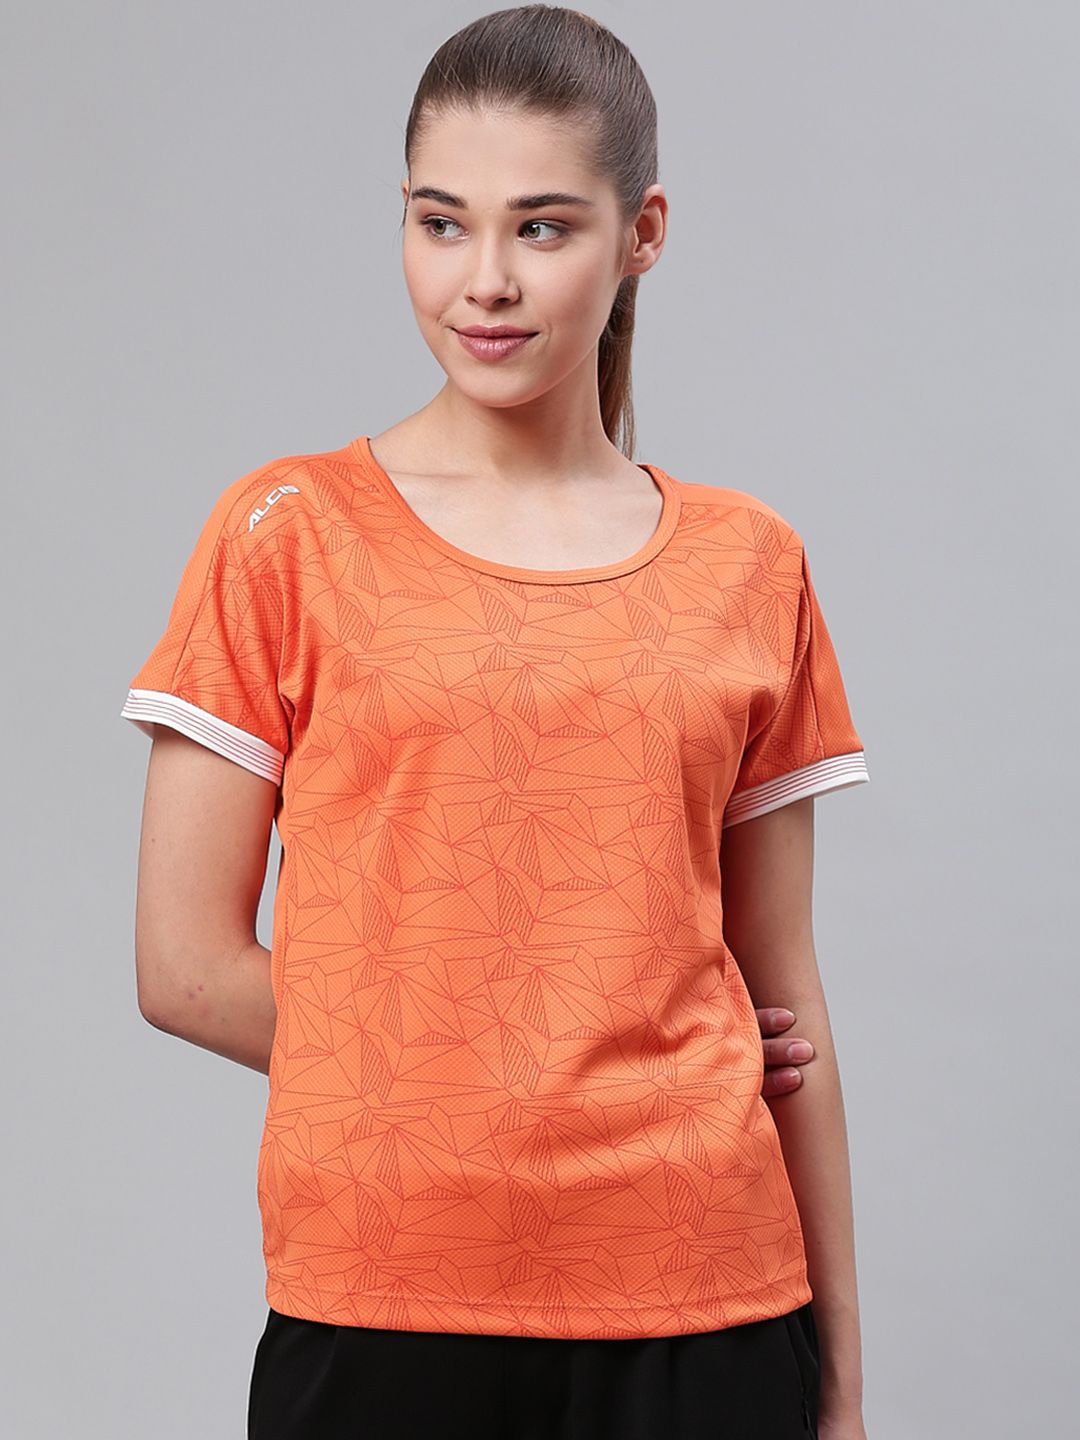 Alcis Women Orange Slim Fit Printed Round Neck Tennis T-shirt Price in India